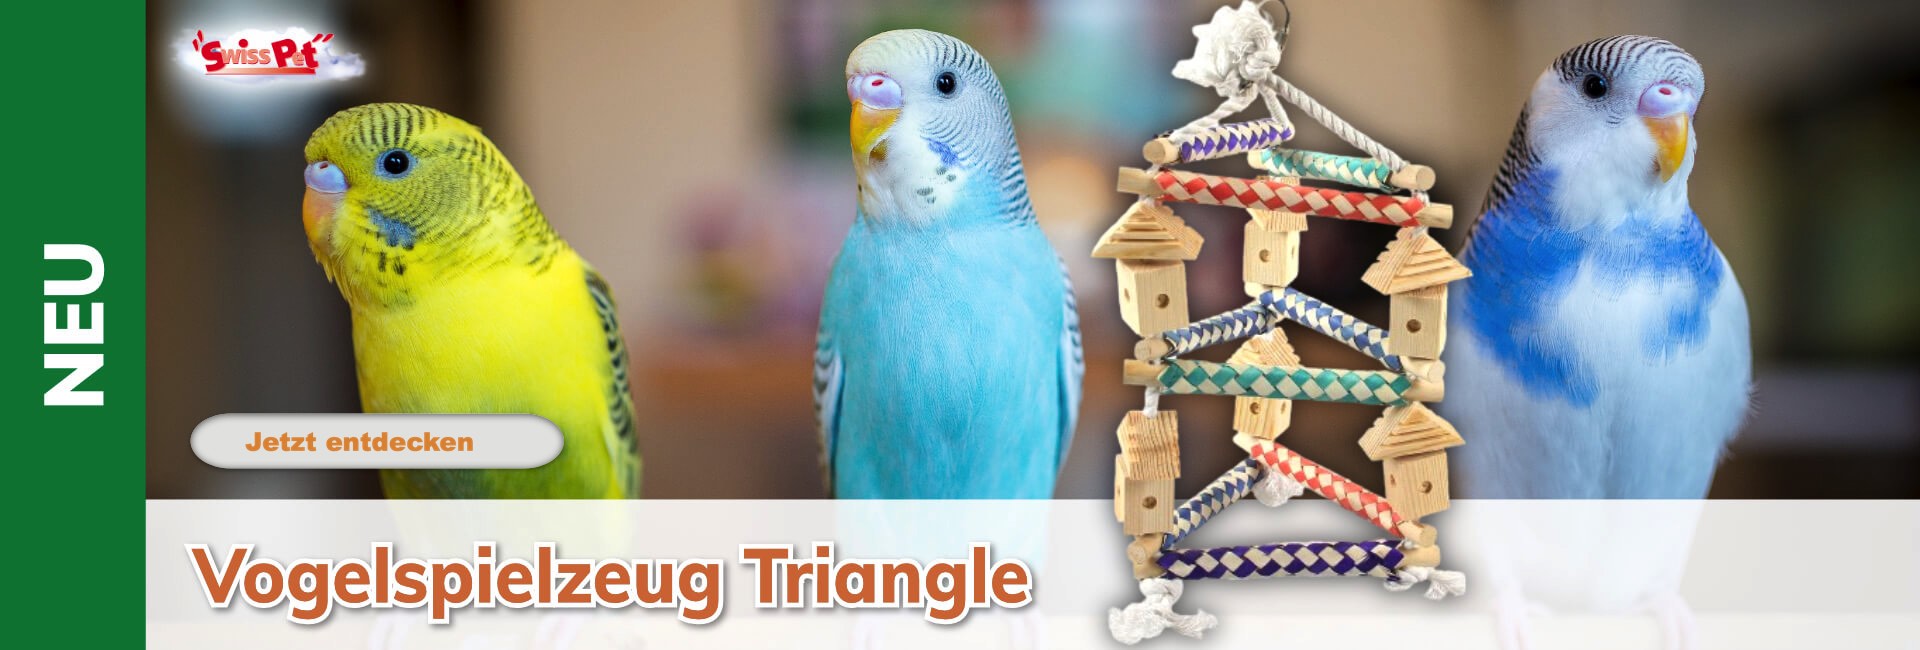 Vogelspielzeug Triangle